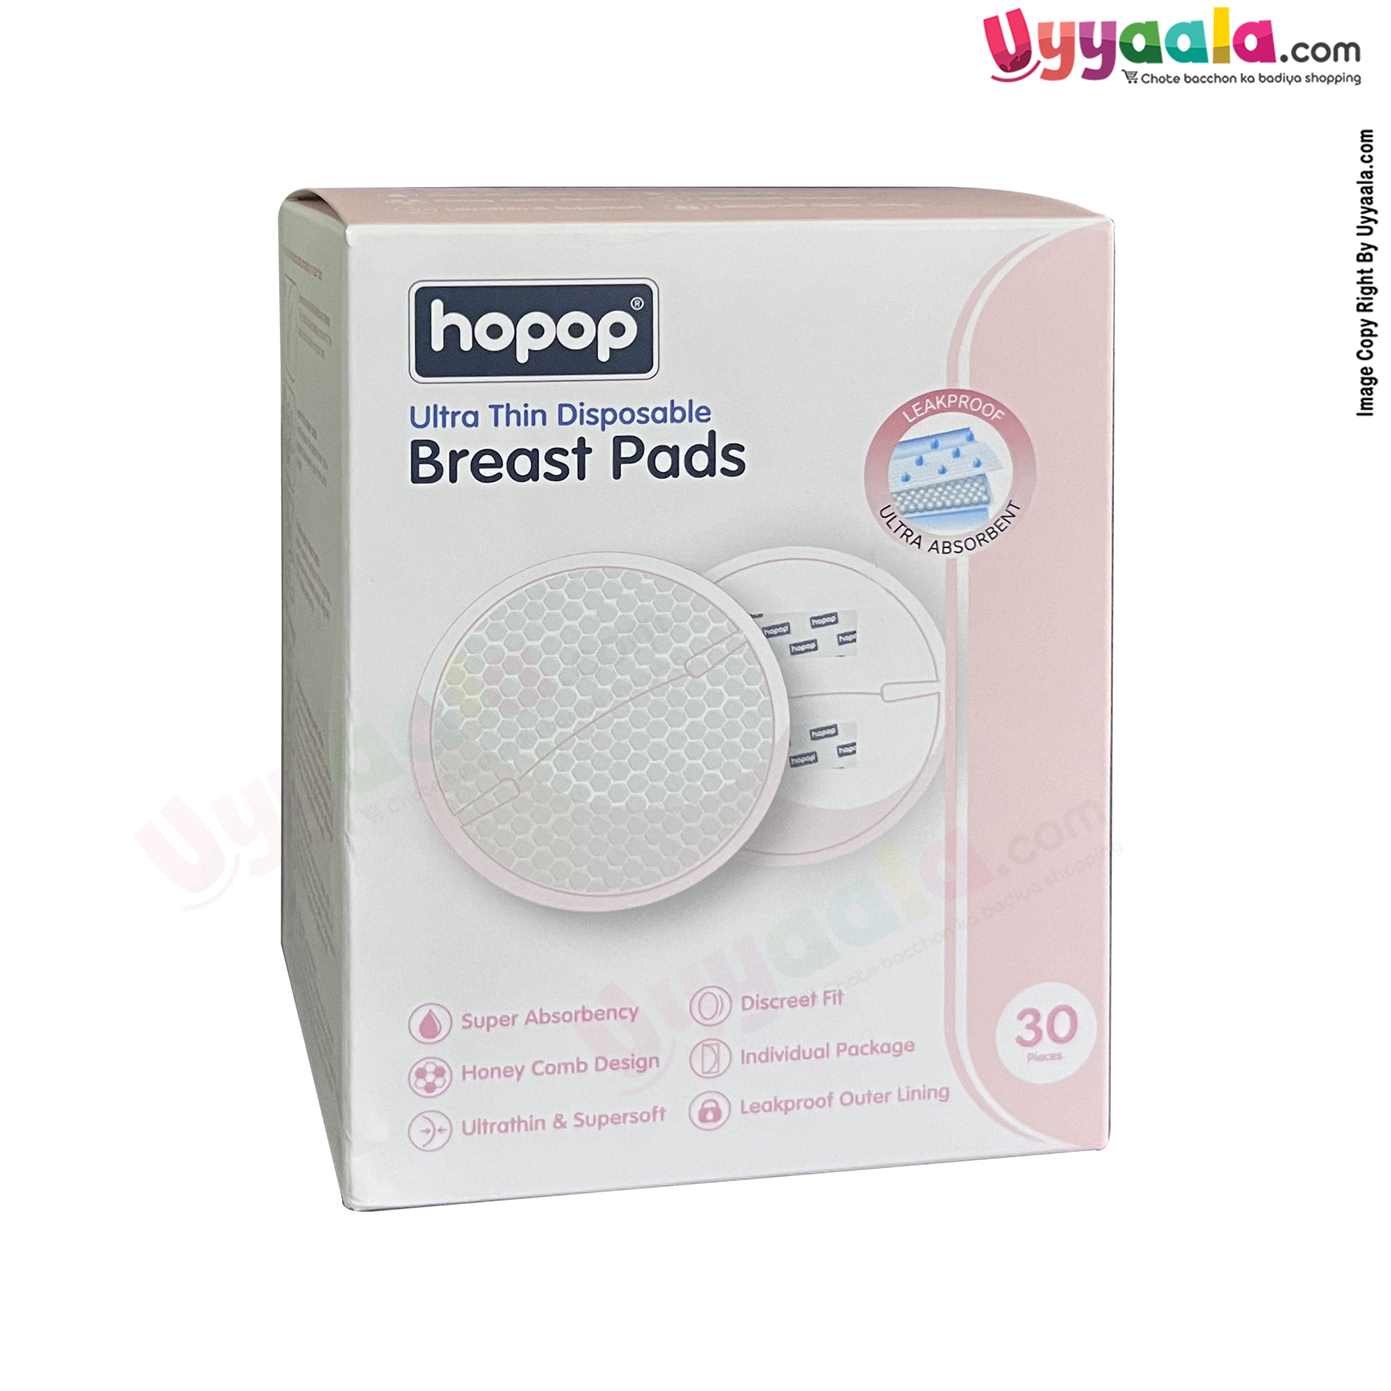 HOPOP Ultra Thin Disposable Breast Pads - 30pcs